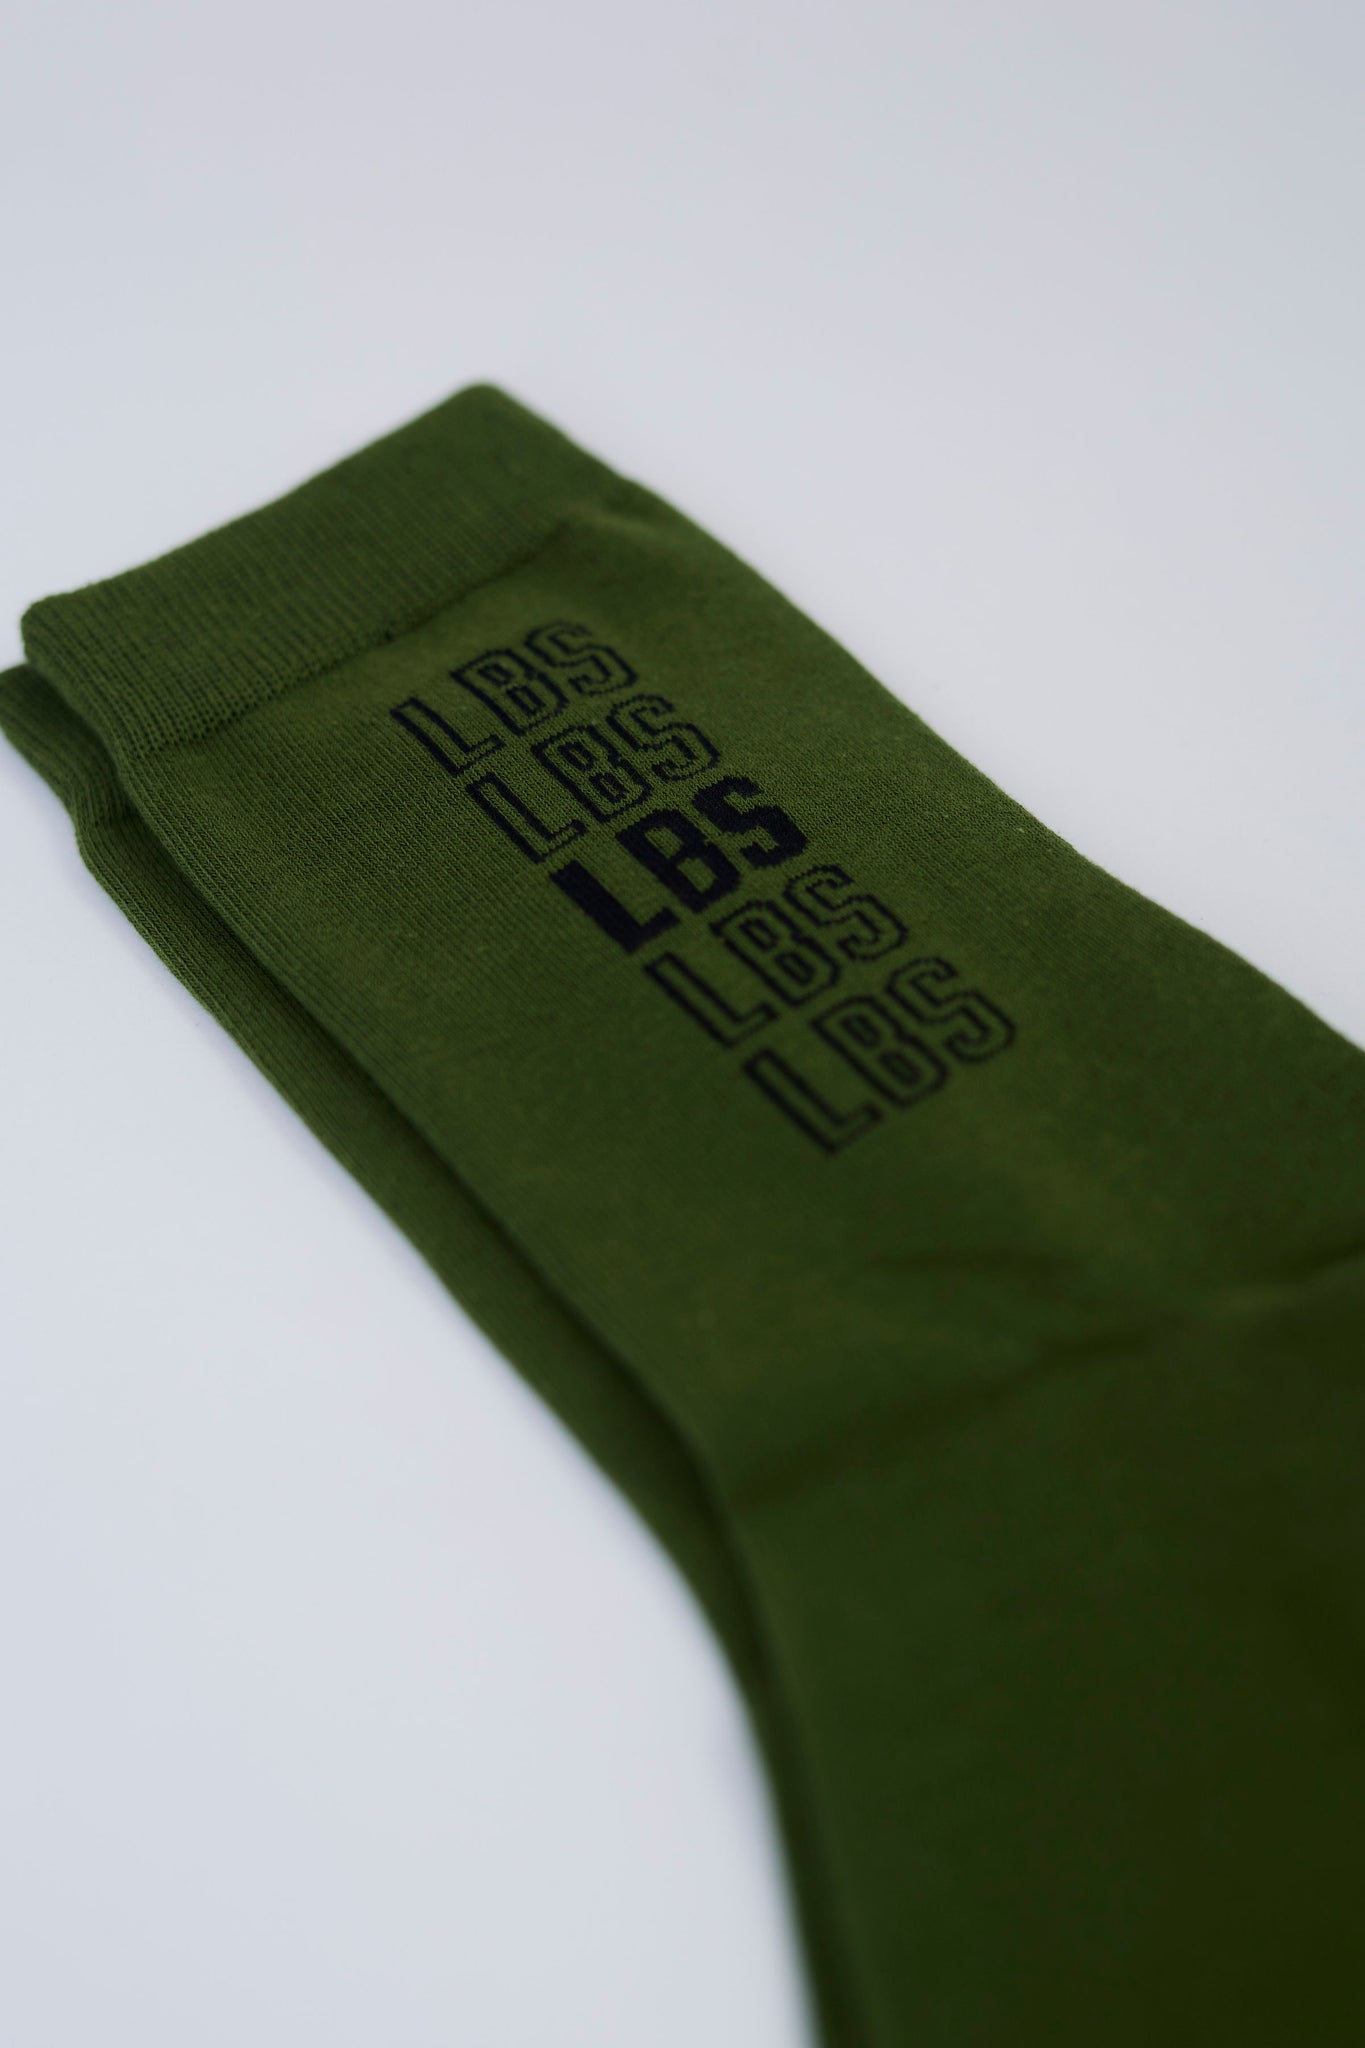 LBS Green Socks